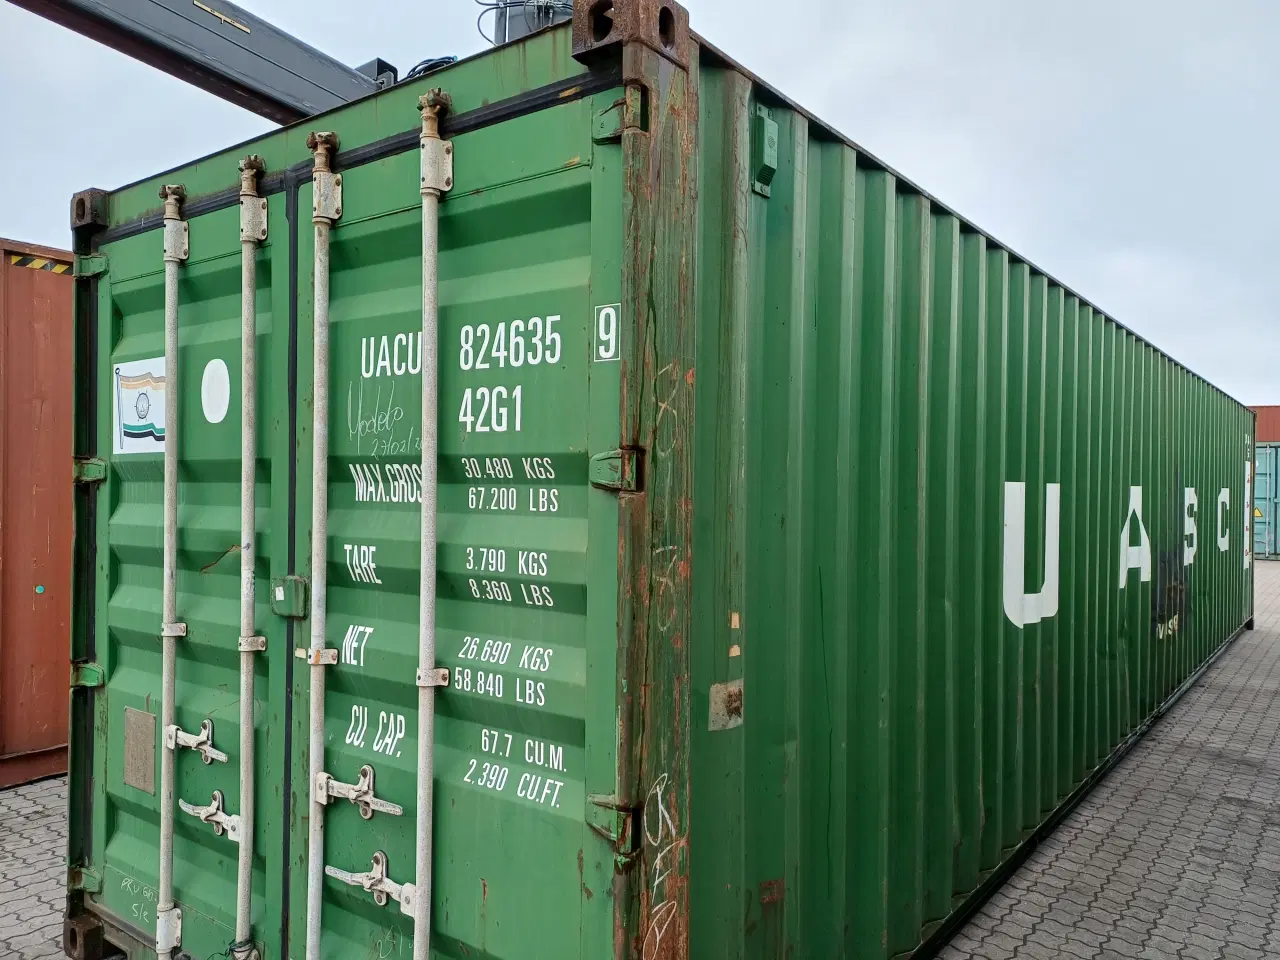 Billede 1 - 40 fods DC Container - ID: UACU 824635-9